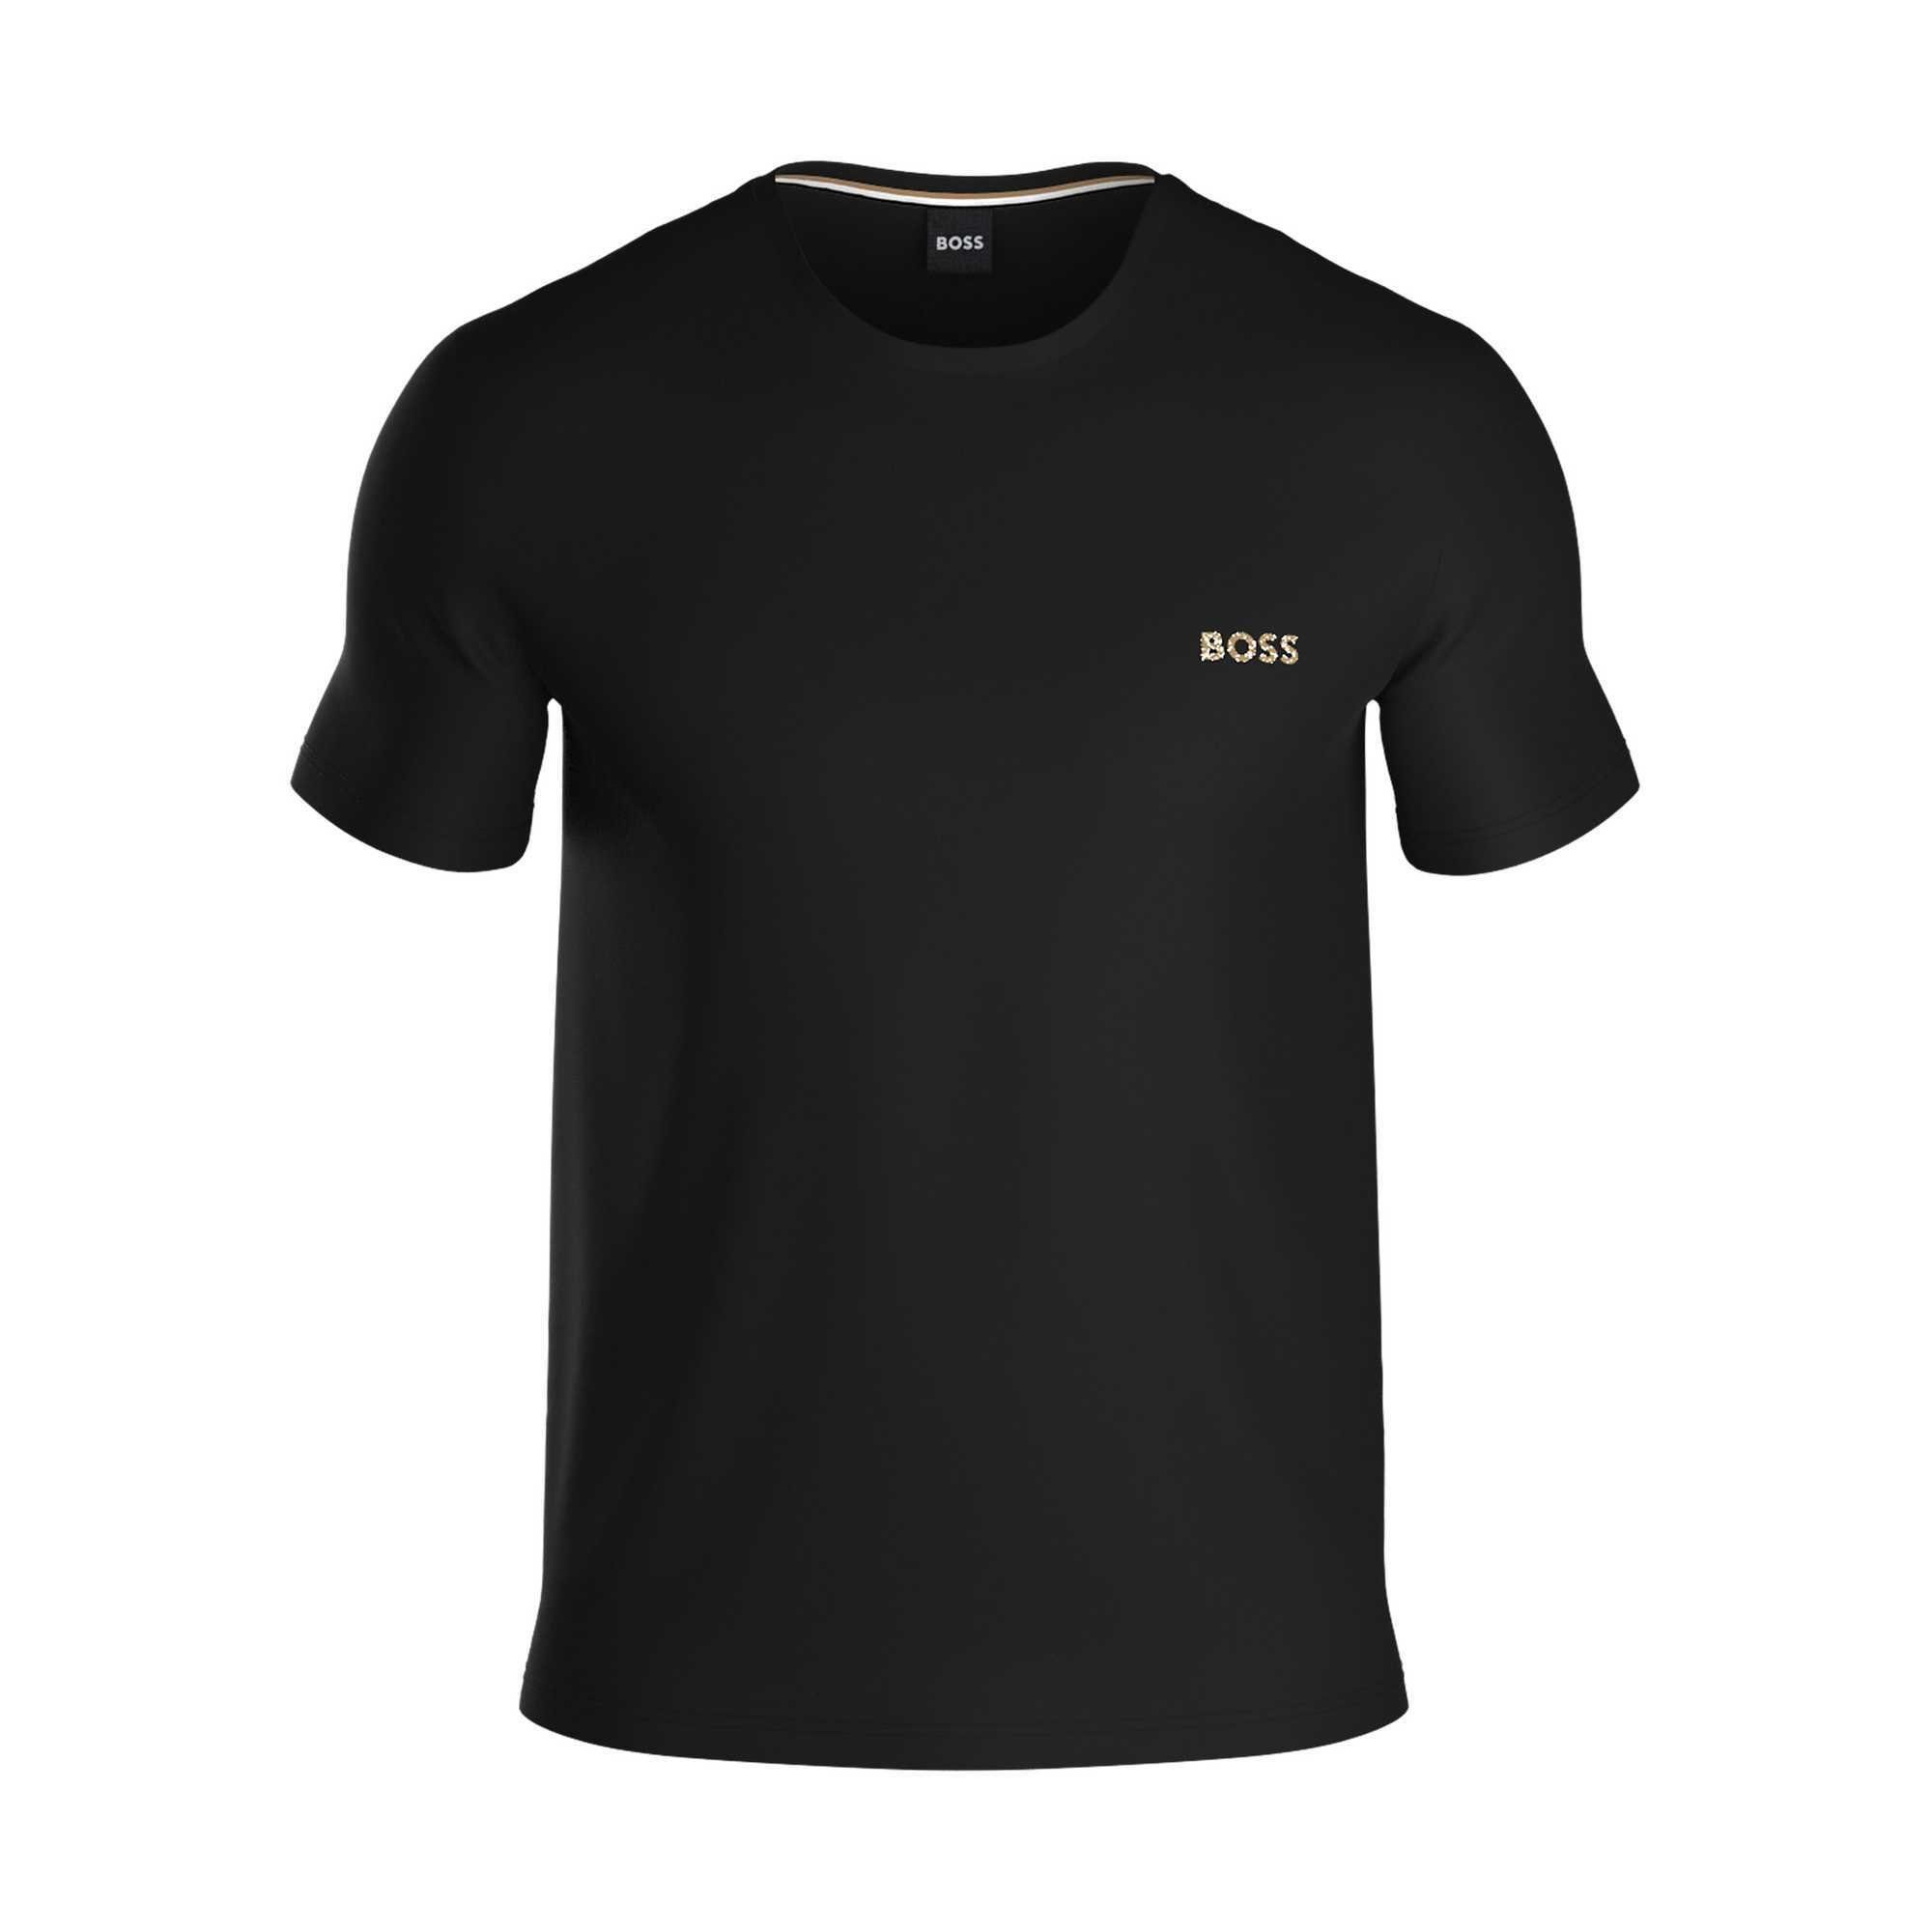 BOSS T-Shirt Herren T-Shirt - Baumwolle Schwarz Rundhals, Mix & Match